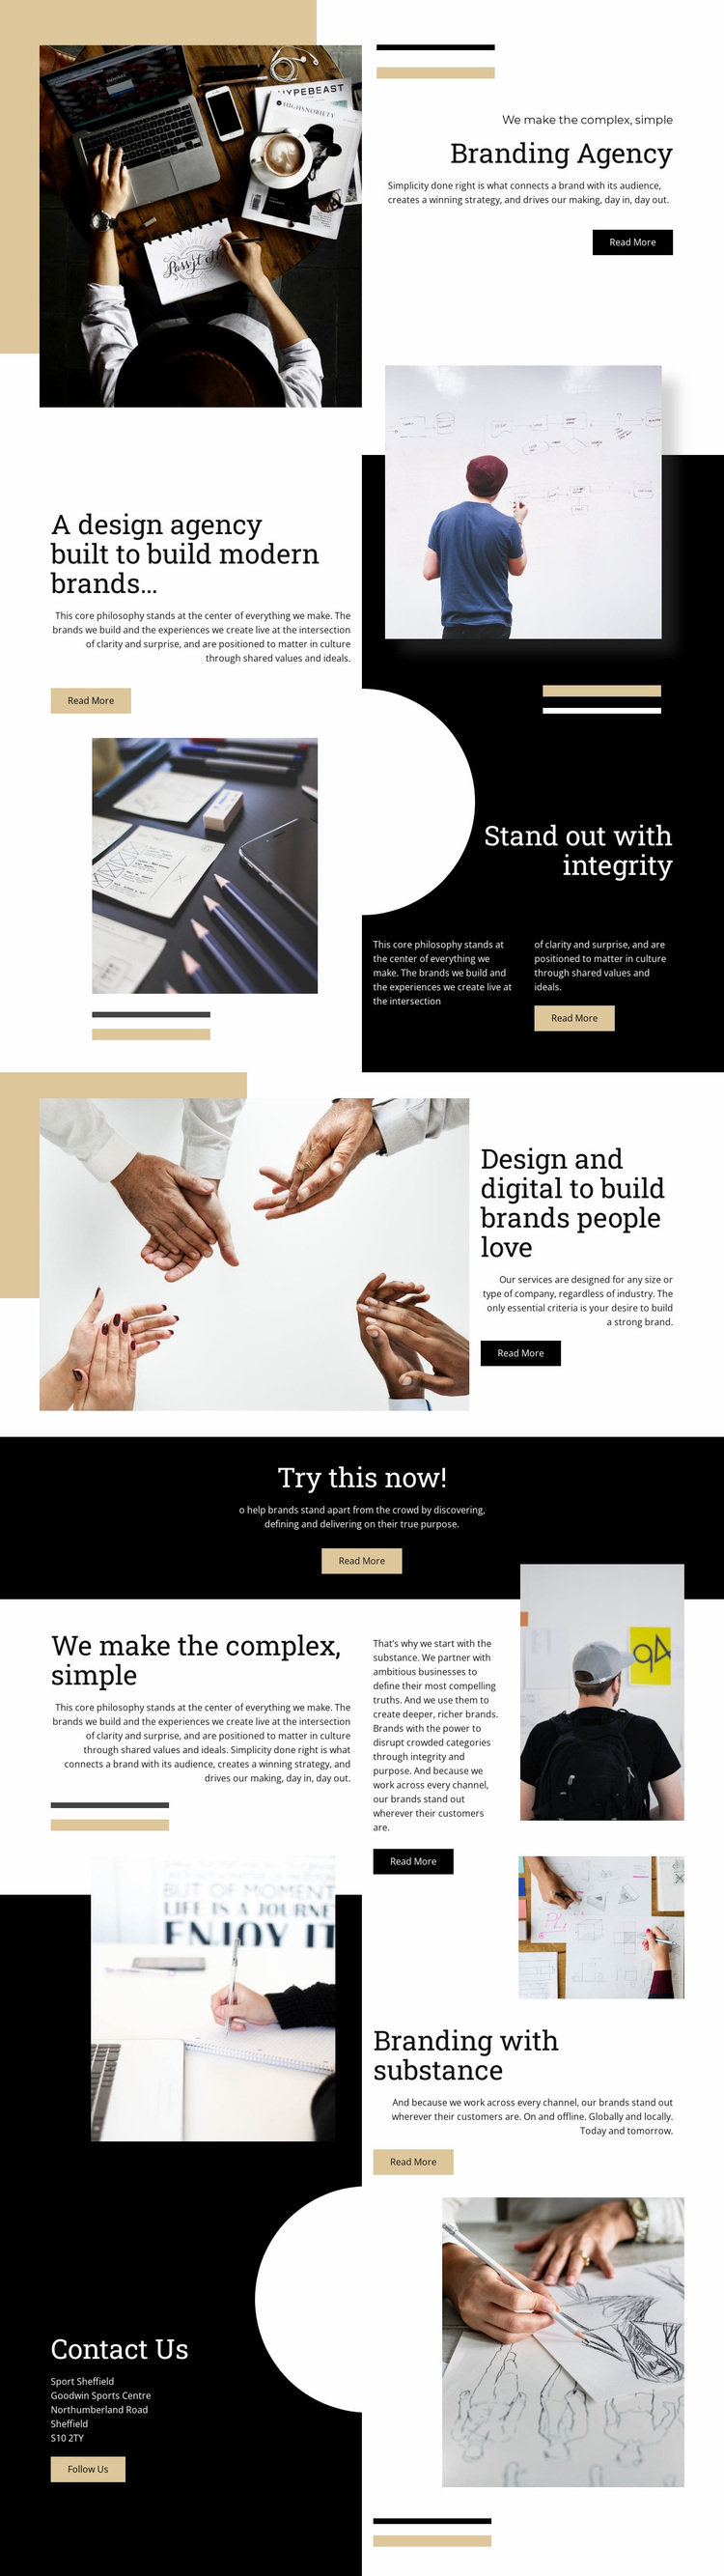 Branding Agency Website Design